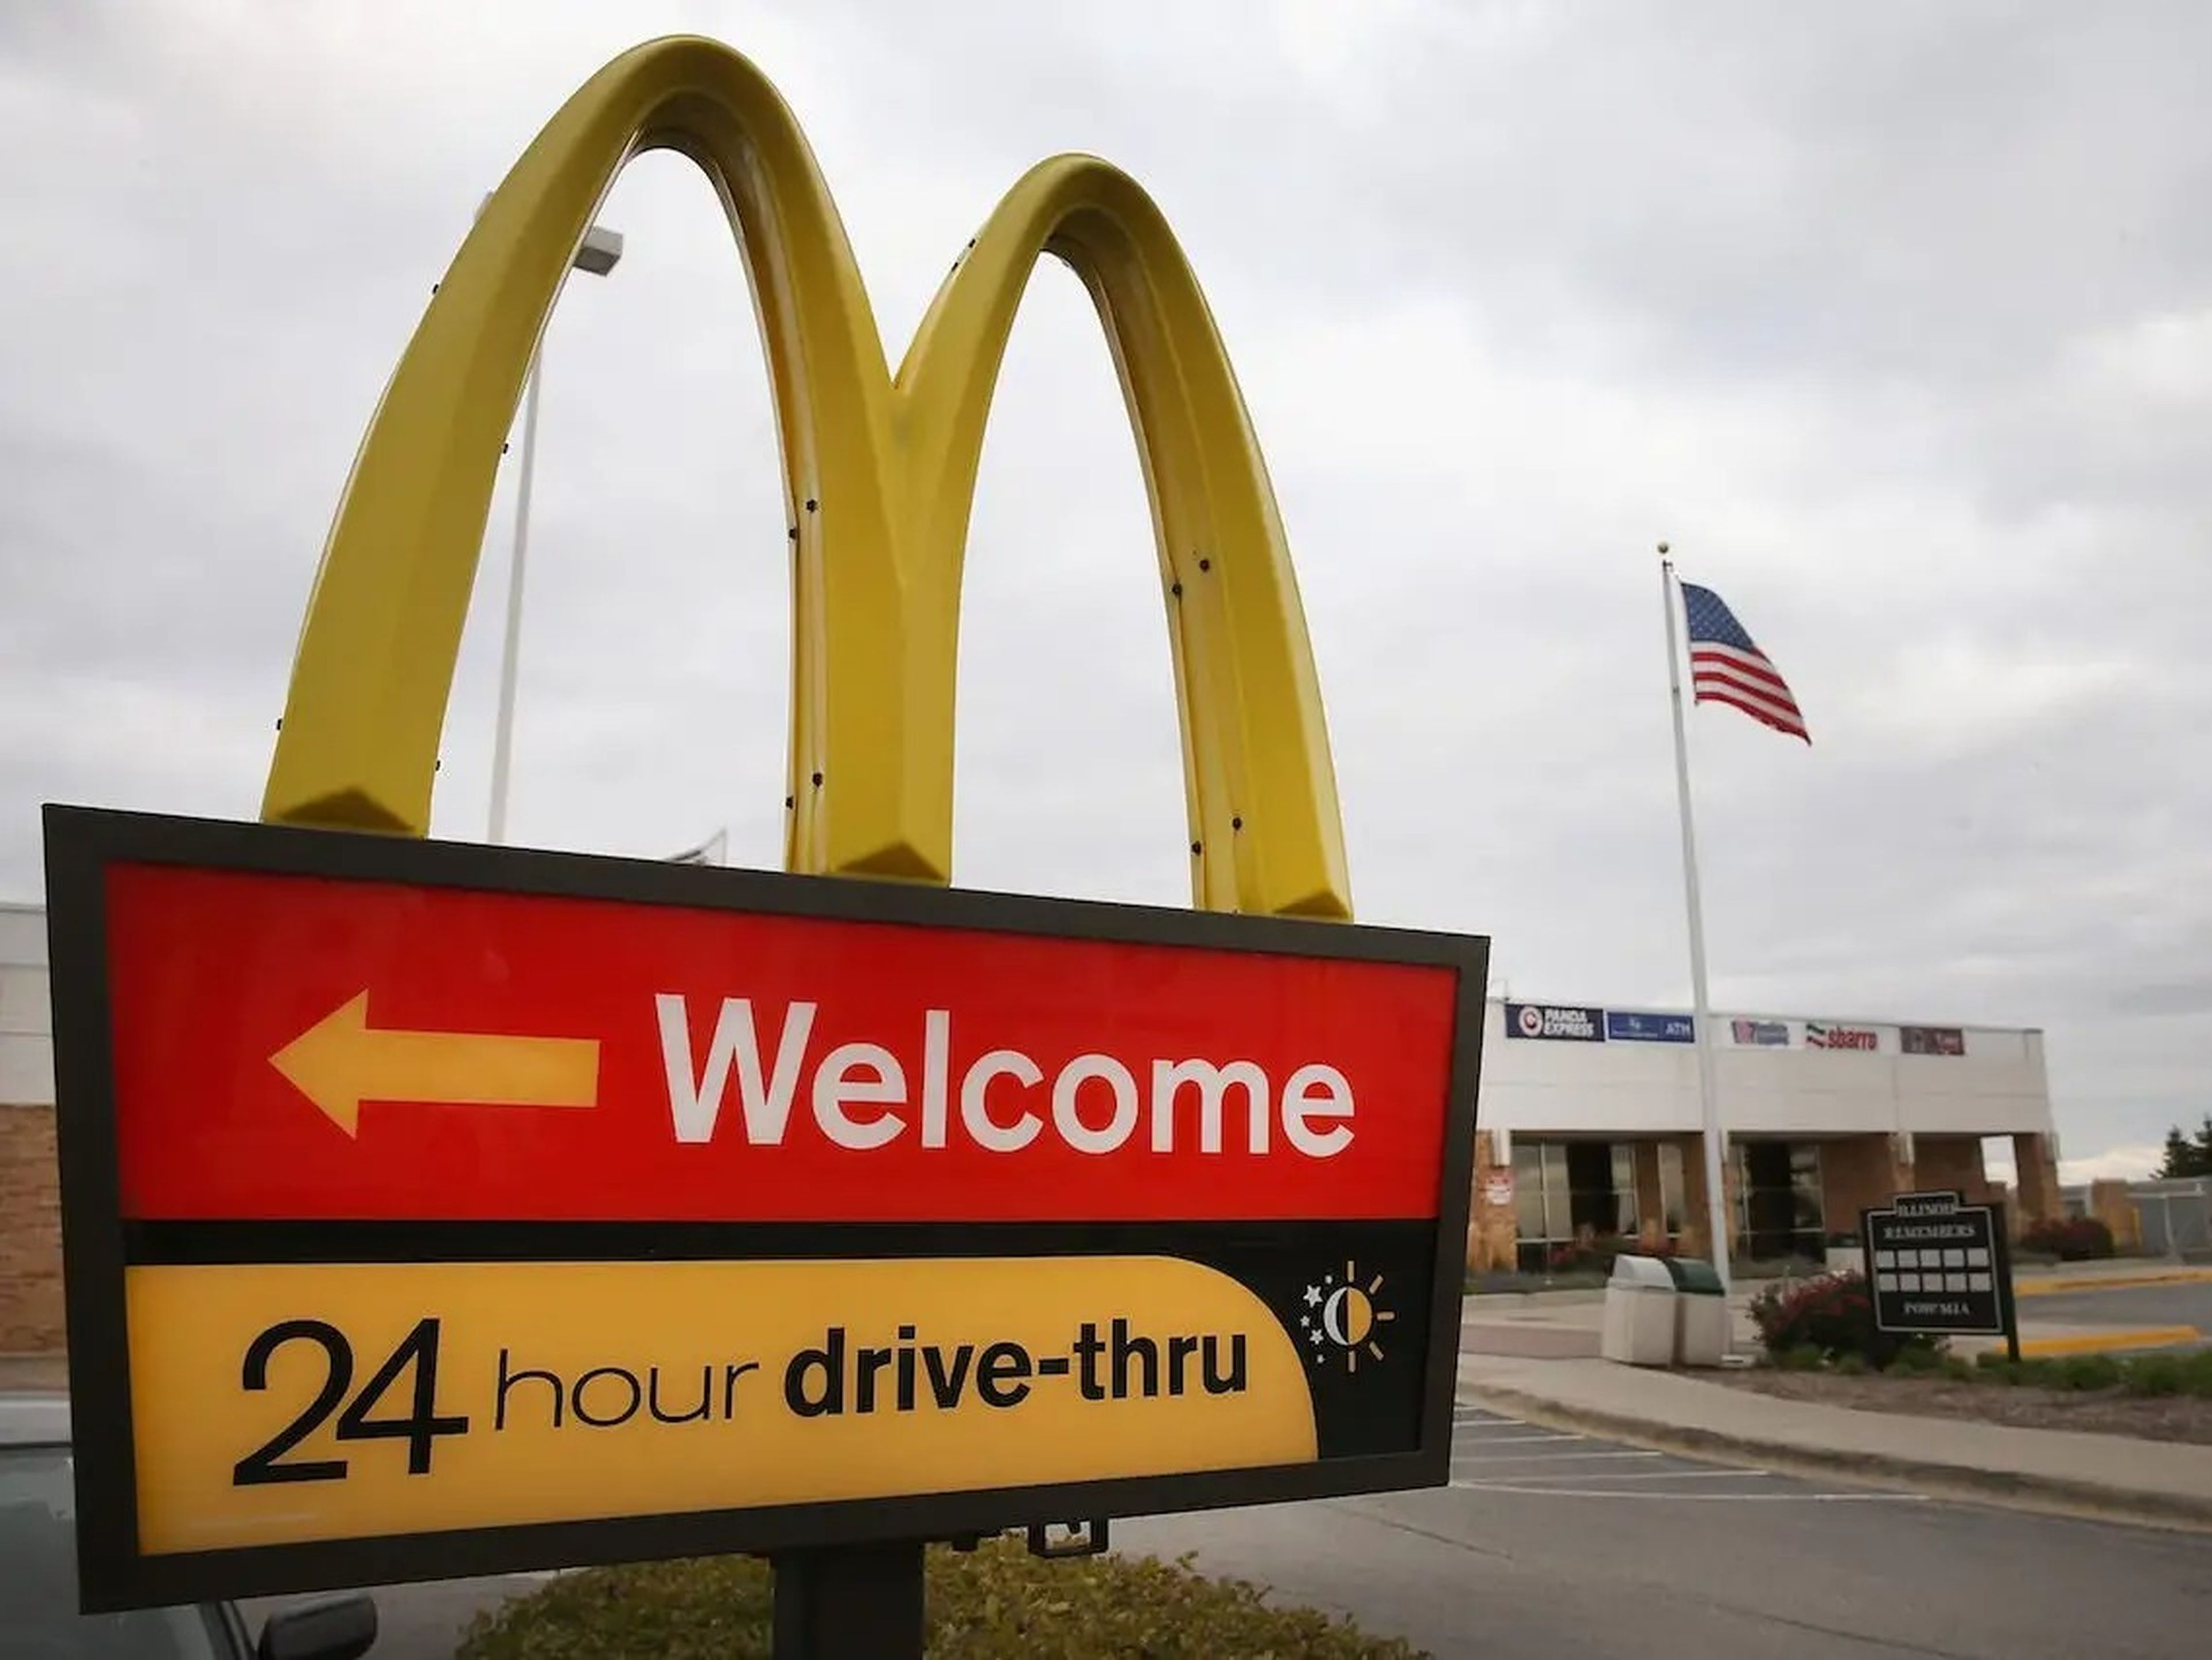 McDonald's drive-thru